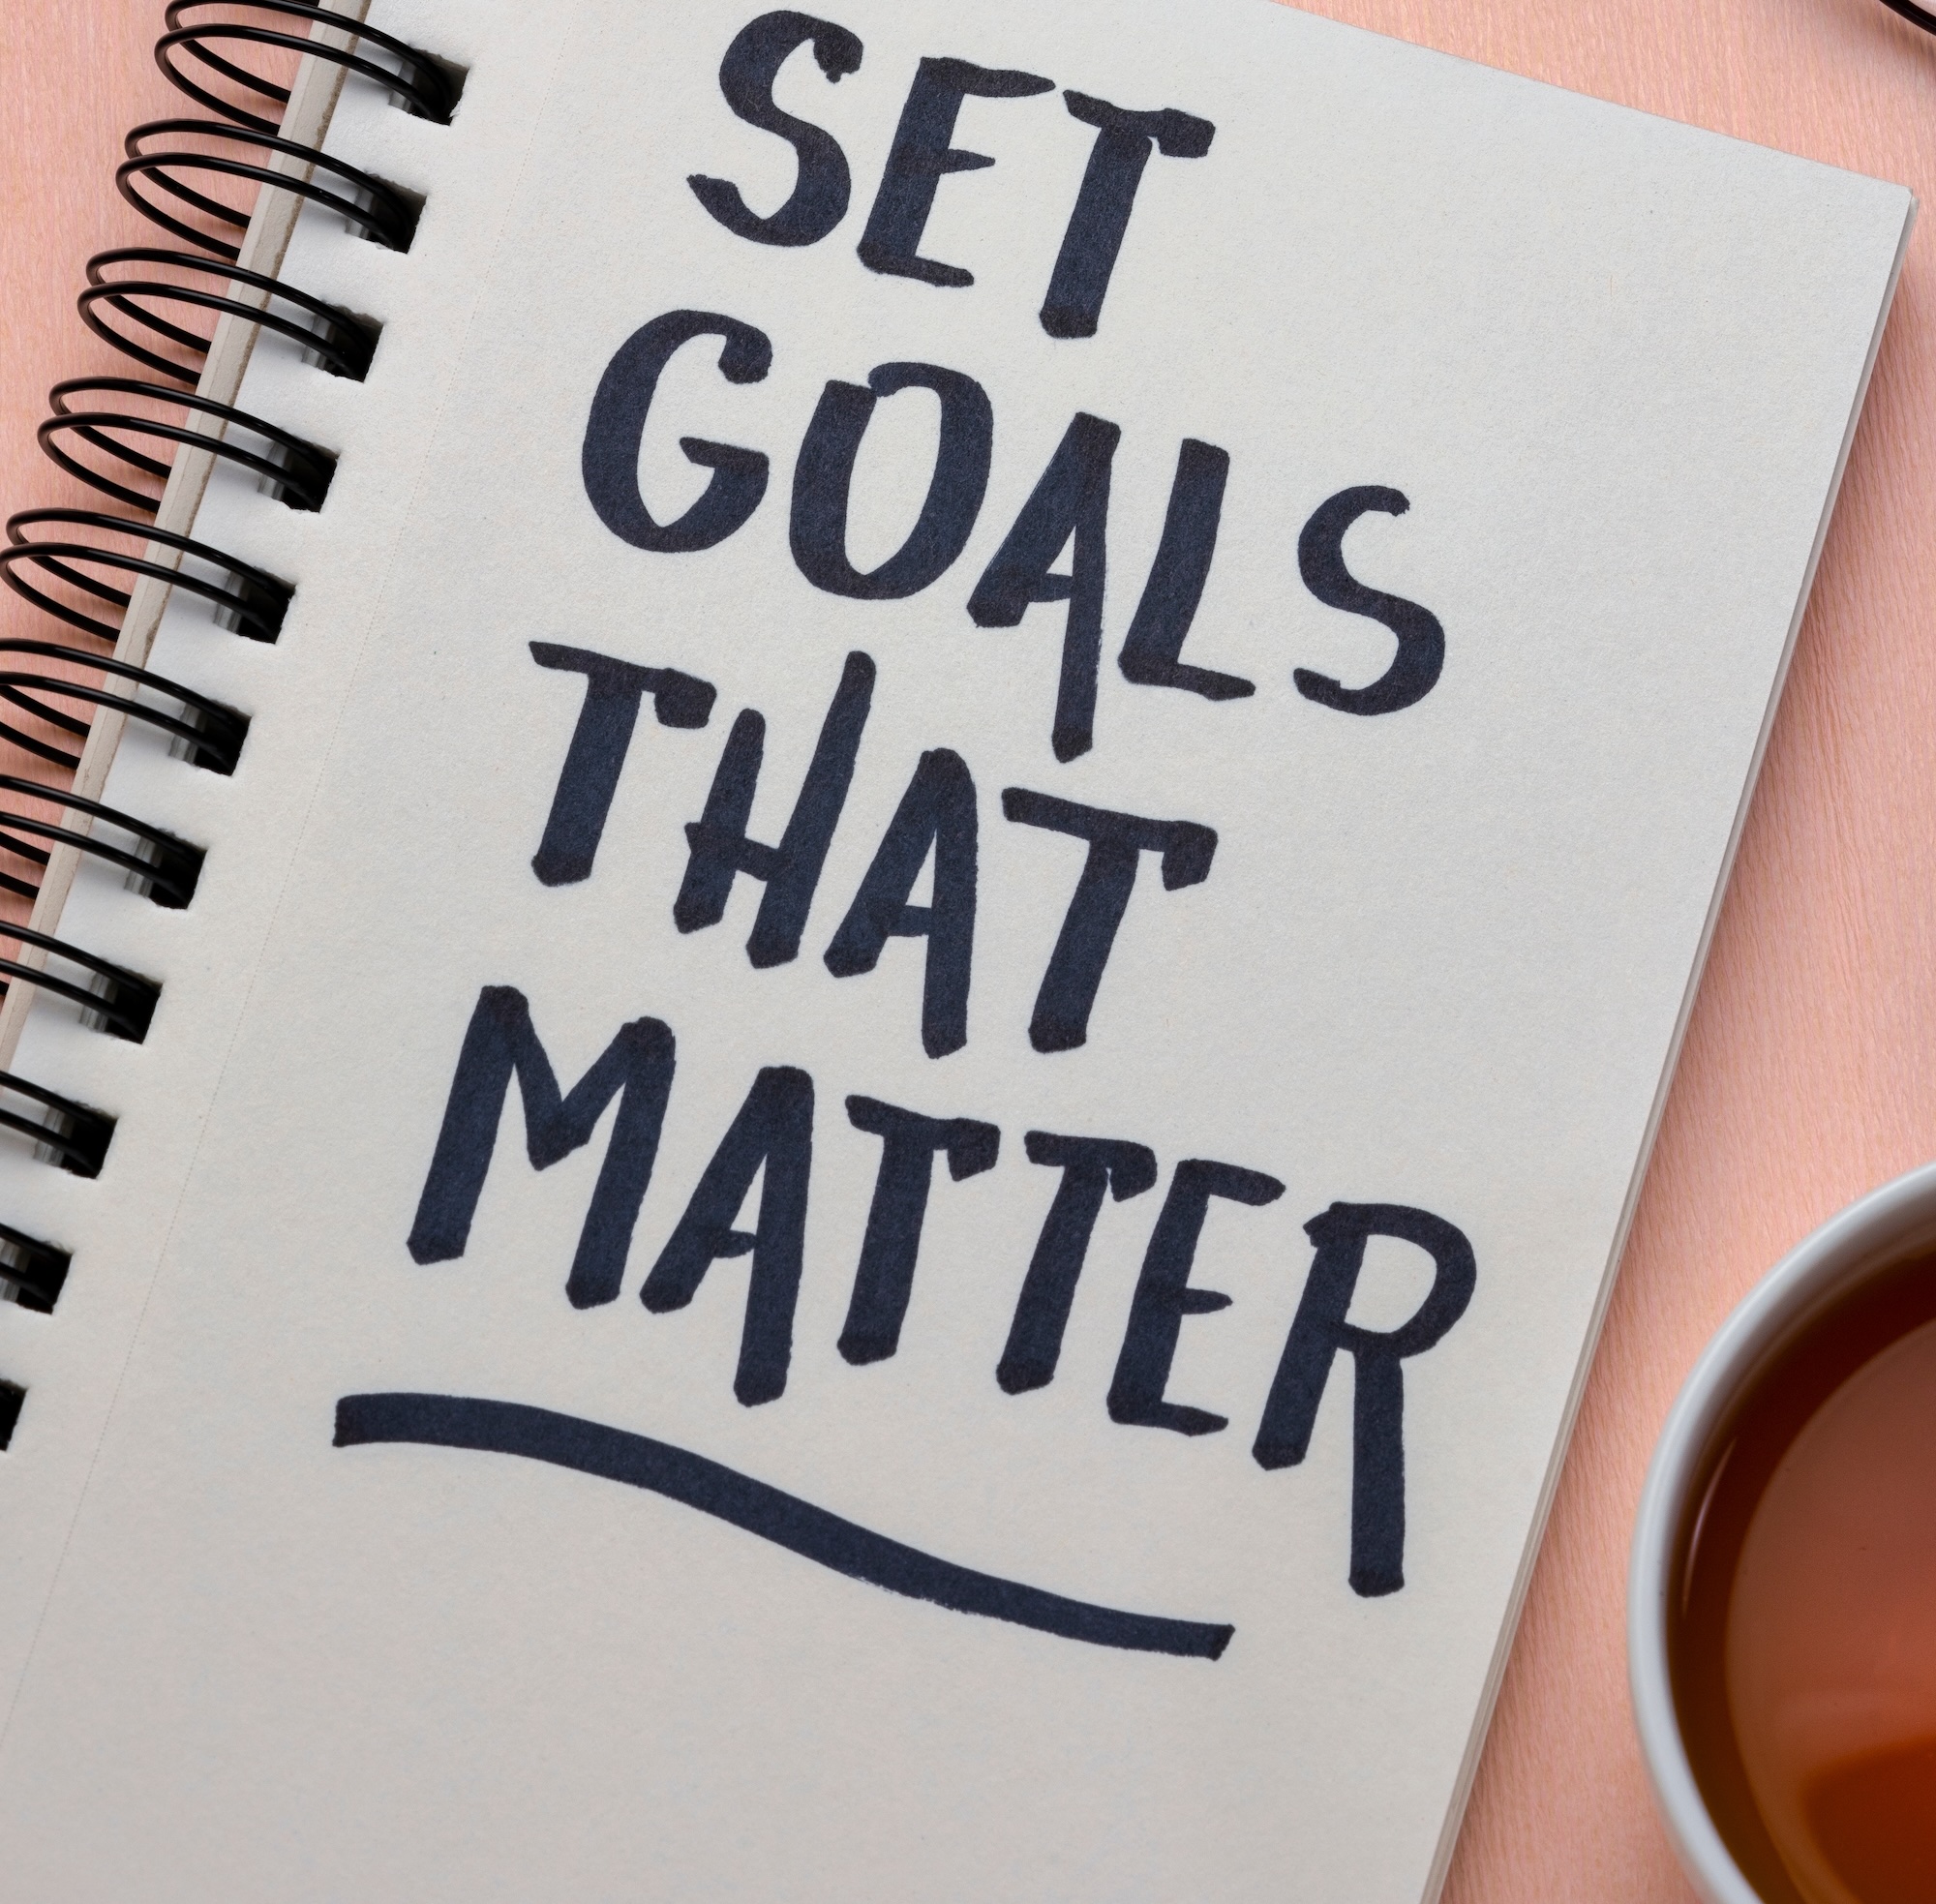 Set goals that matter  inspirational advice or reminder - handwriting in a notebook, smart goals setting concept